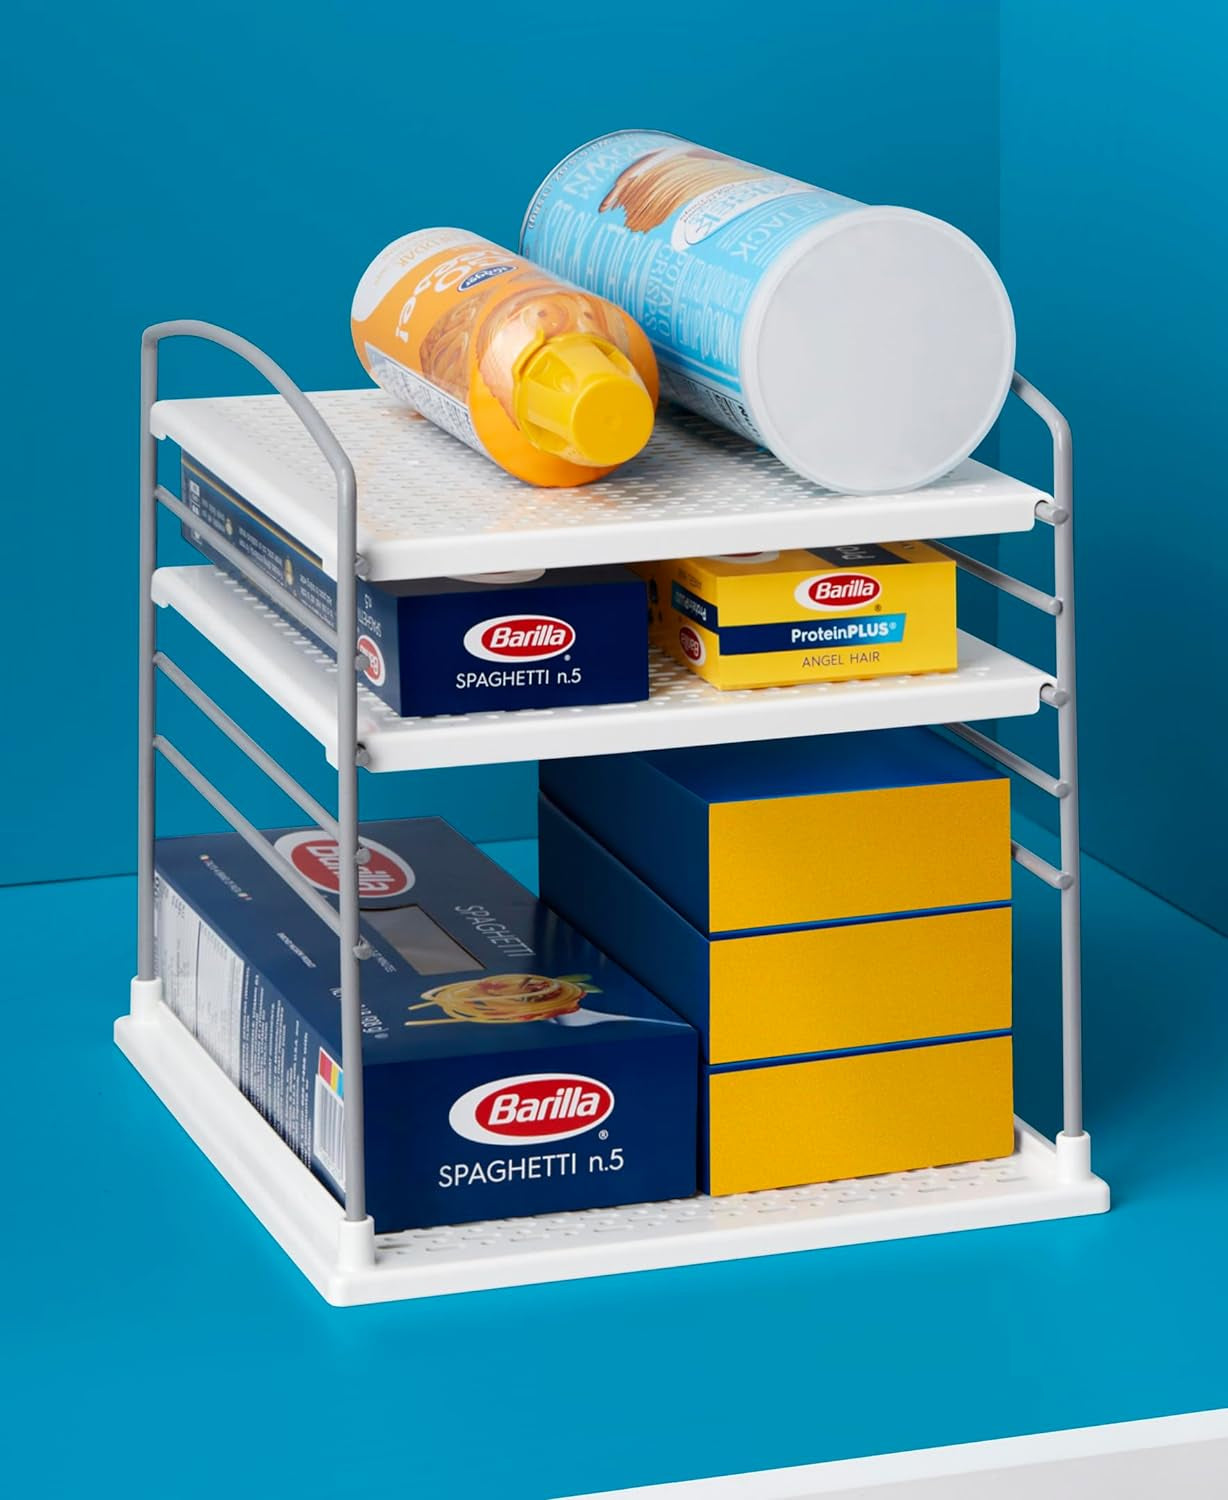 Upspace Adjustable Box Organizer for Foil Wrap and Kitchen Cabinet Storage, Original, White